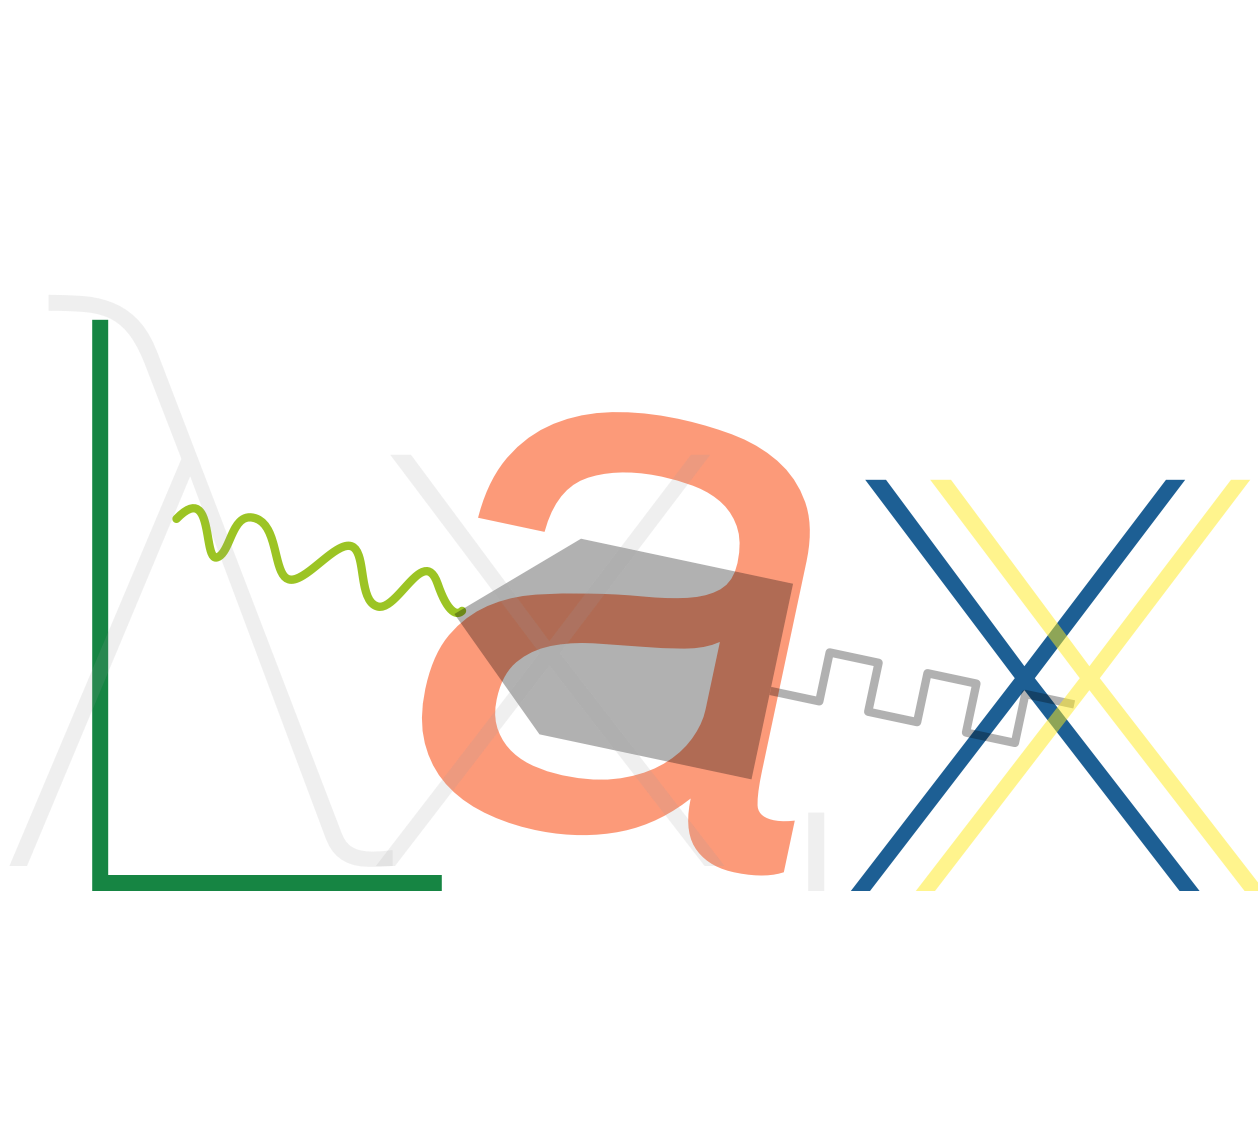 Lax-logo.png